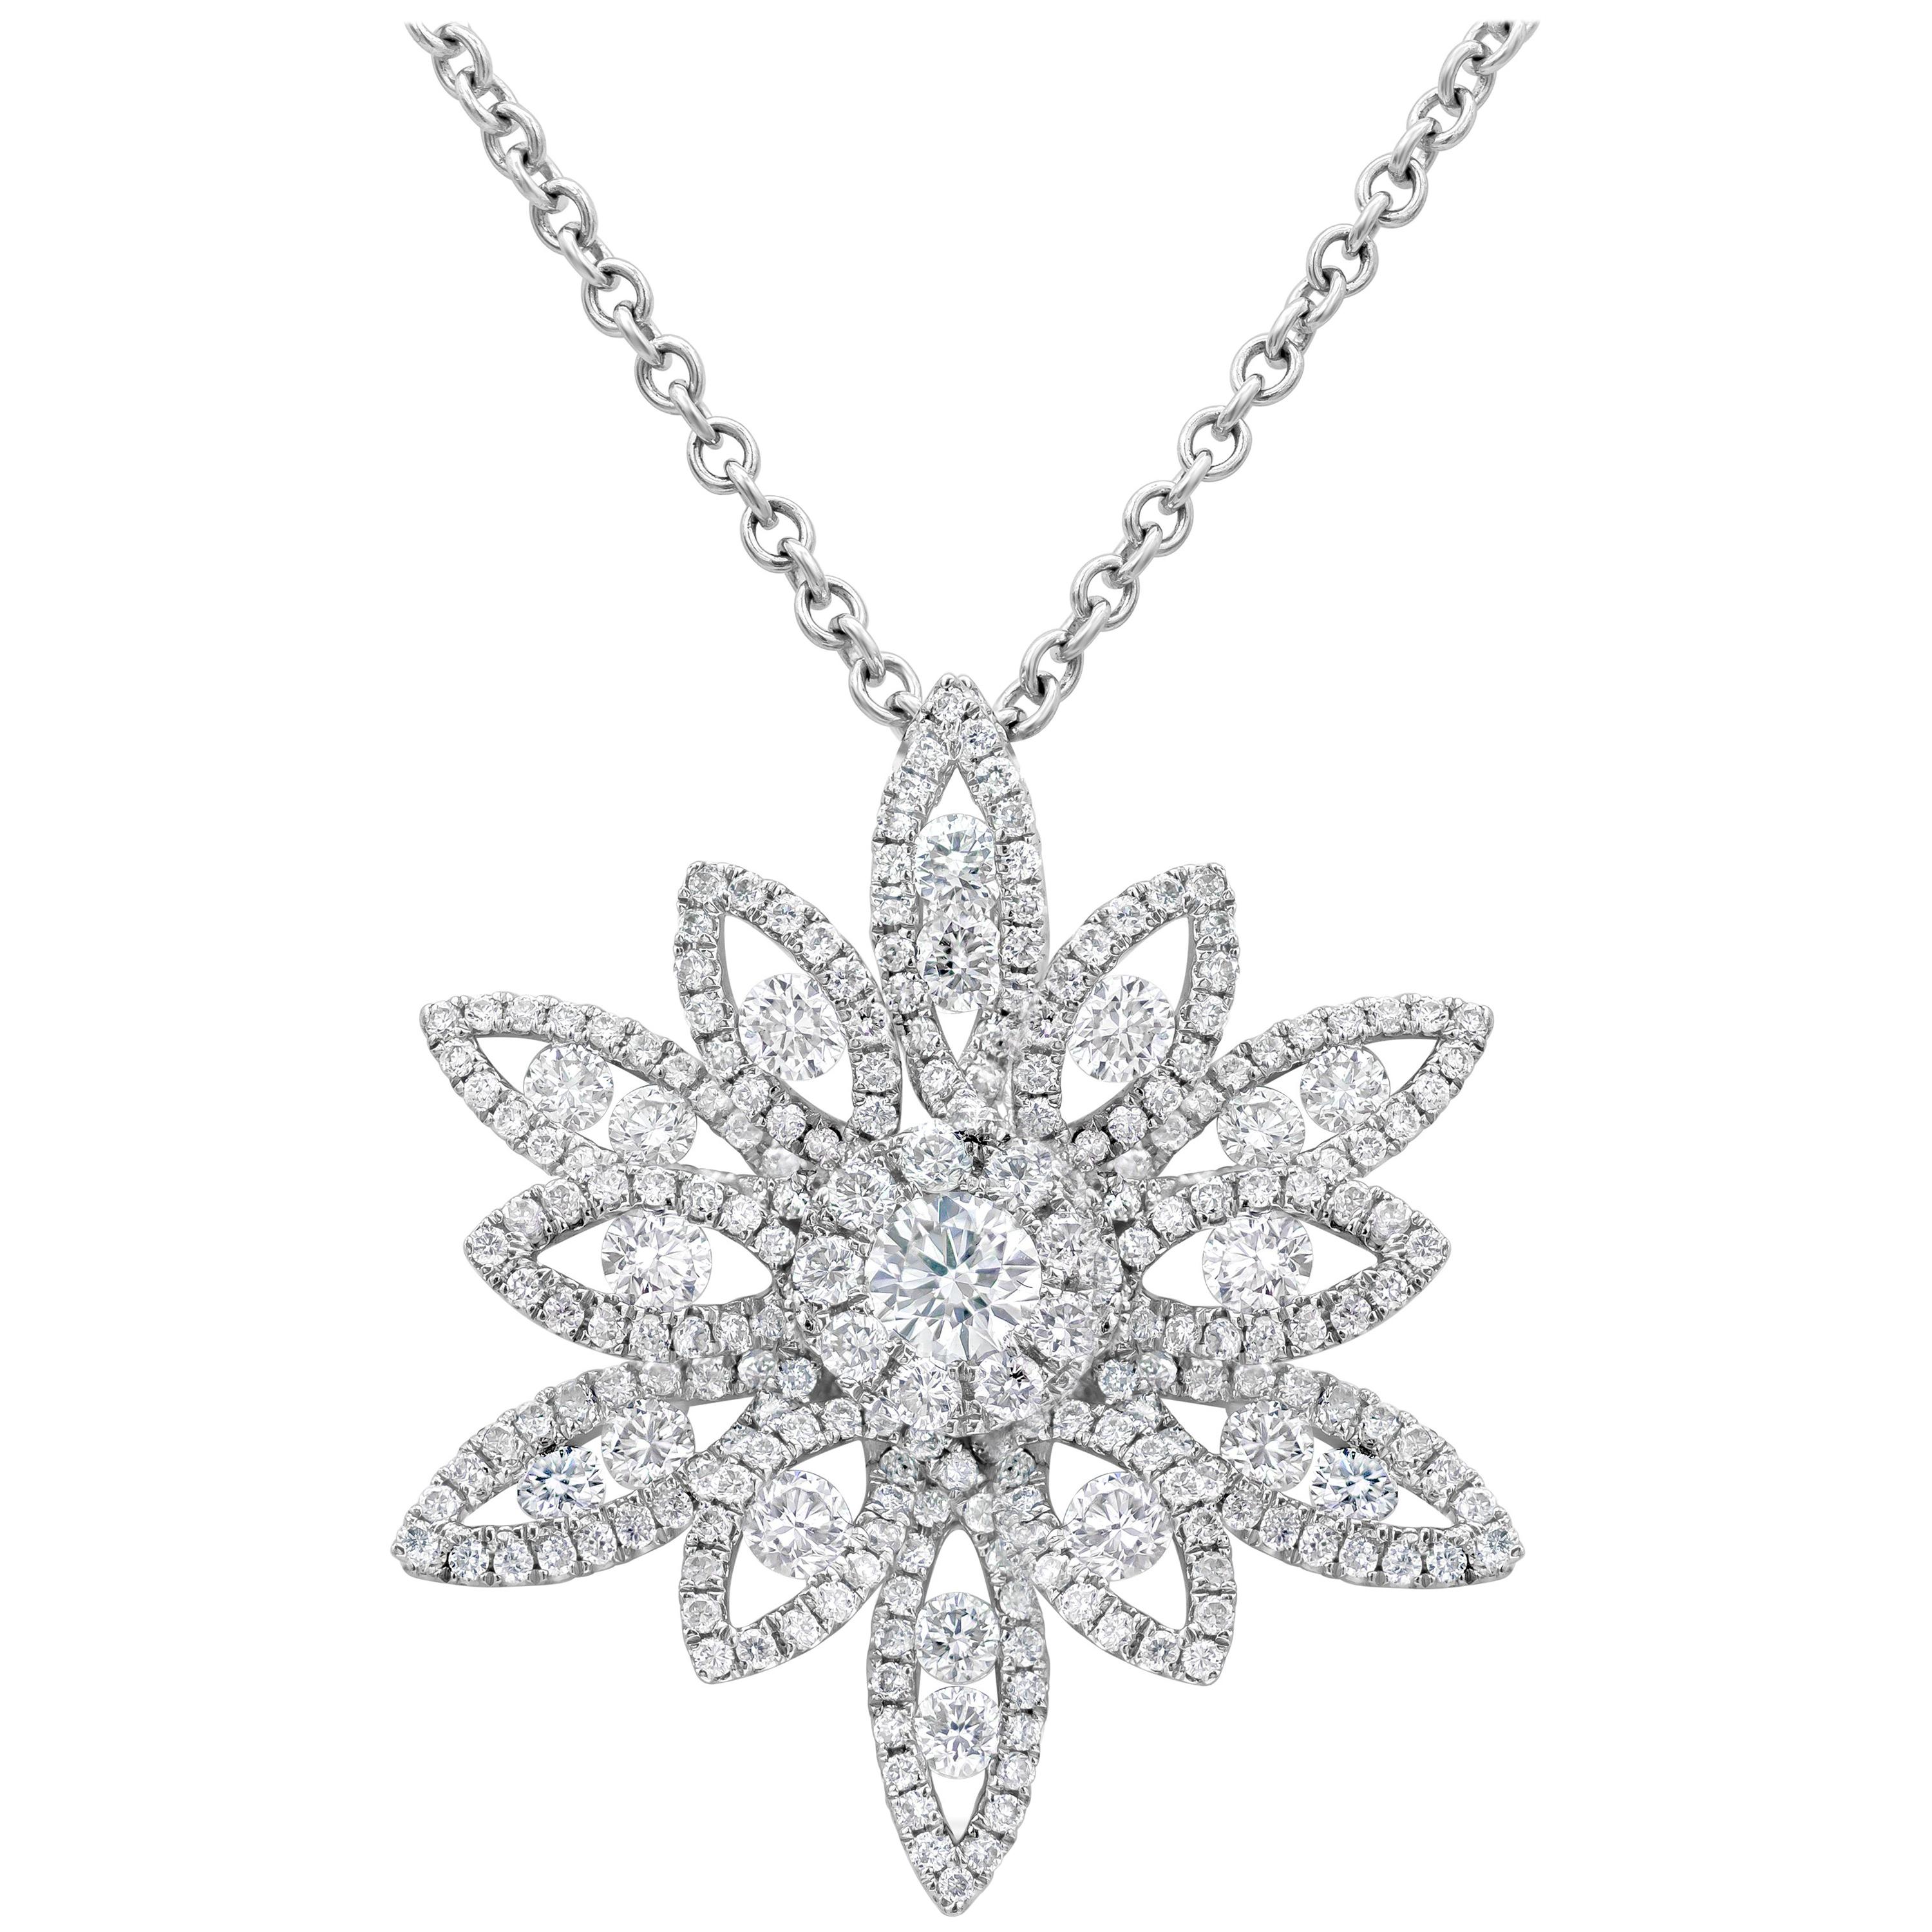 Roman Malakov 1.58 Carats Total Round Diamond Cluster Flower Pendant Necklace